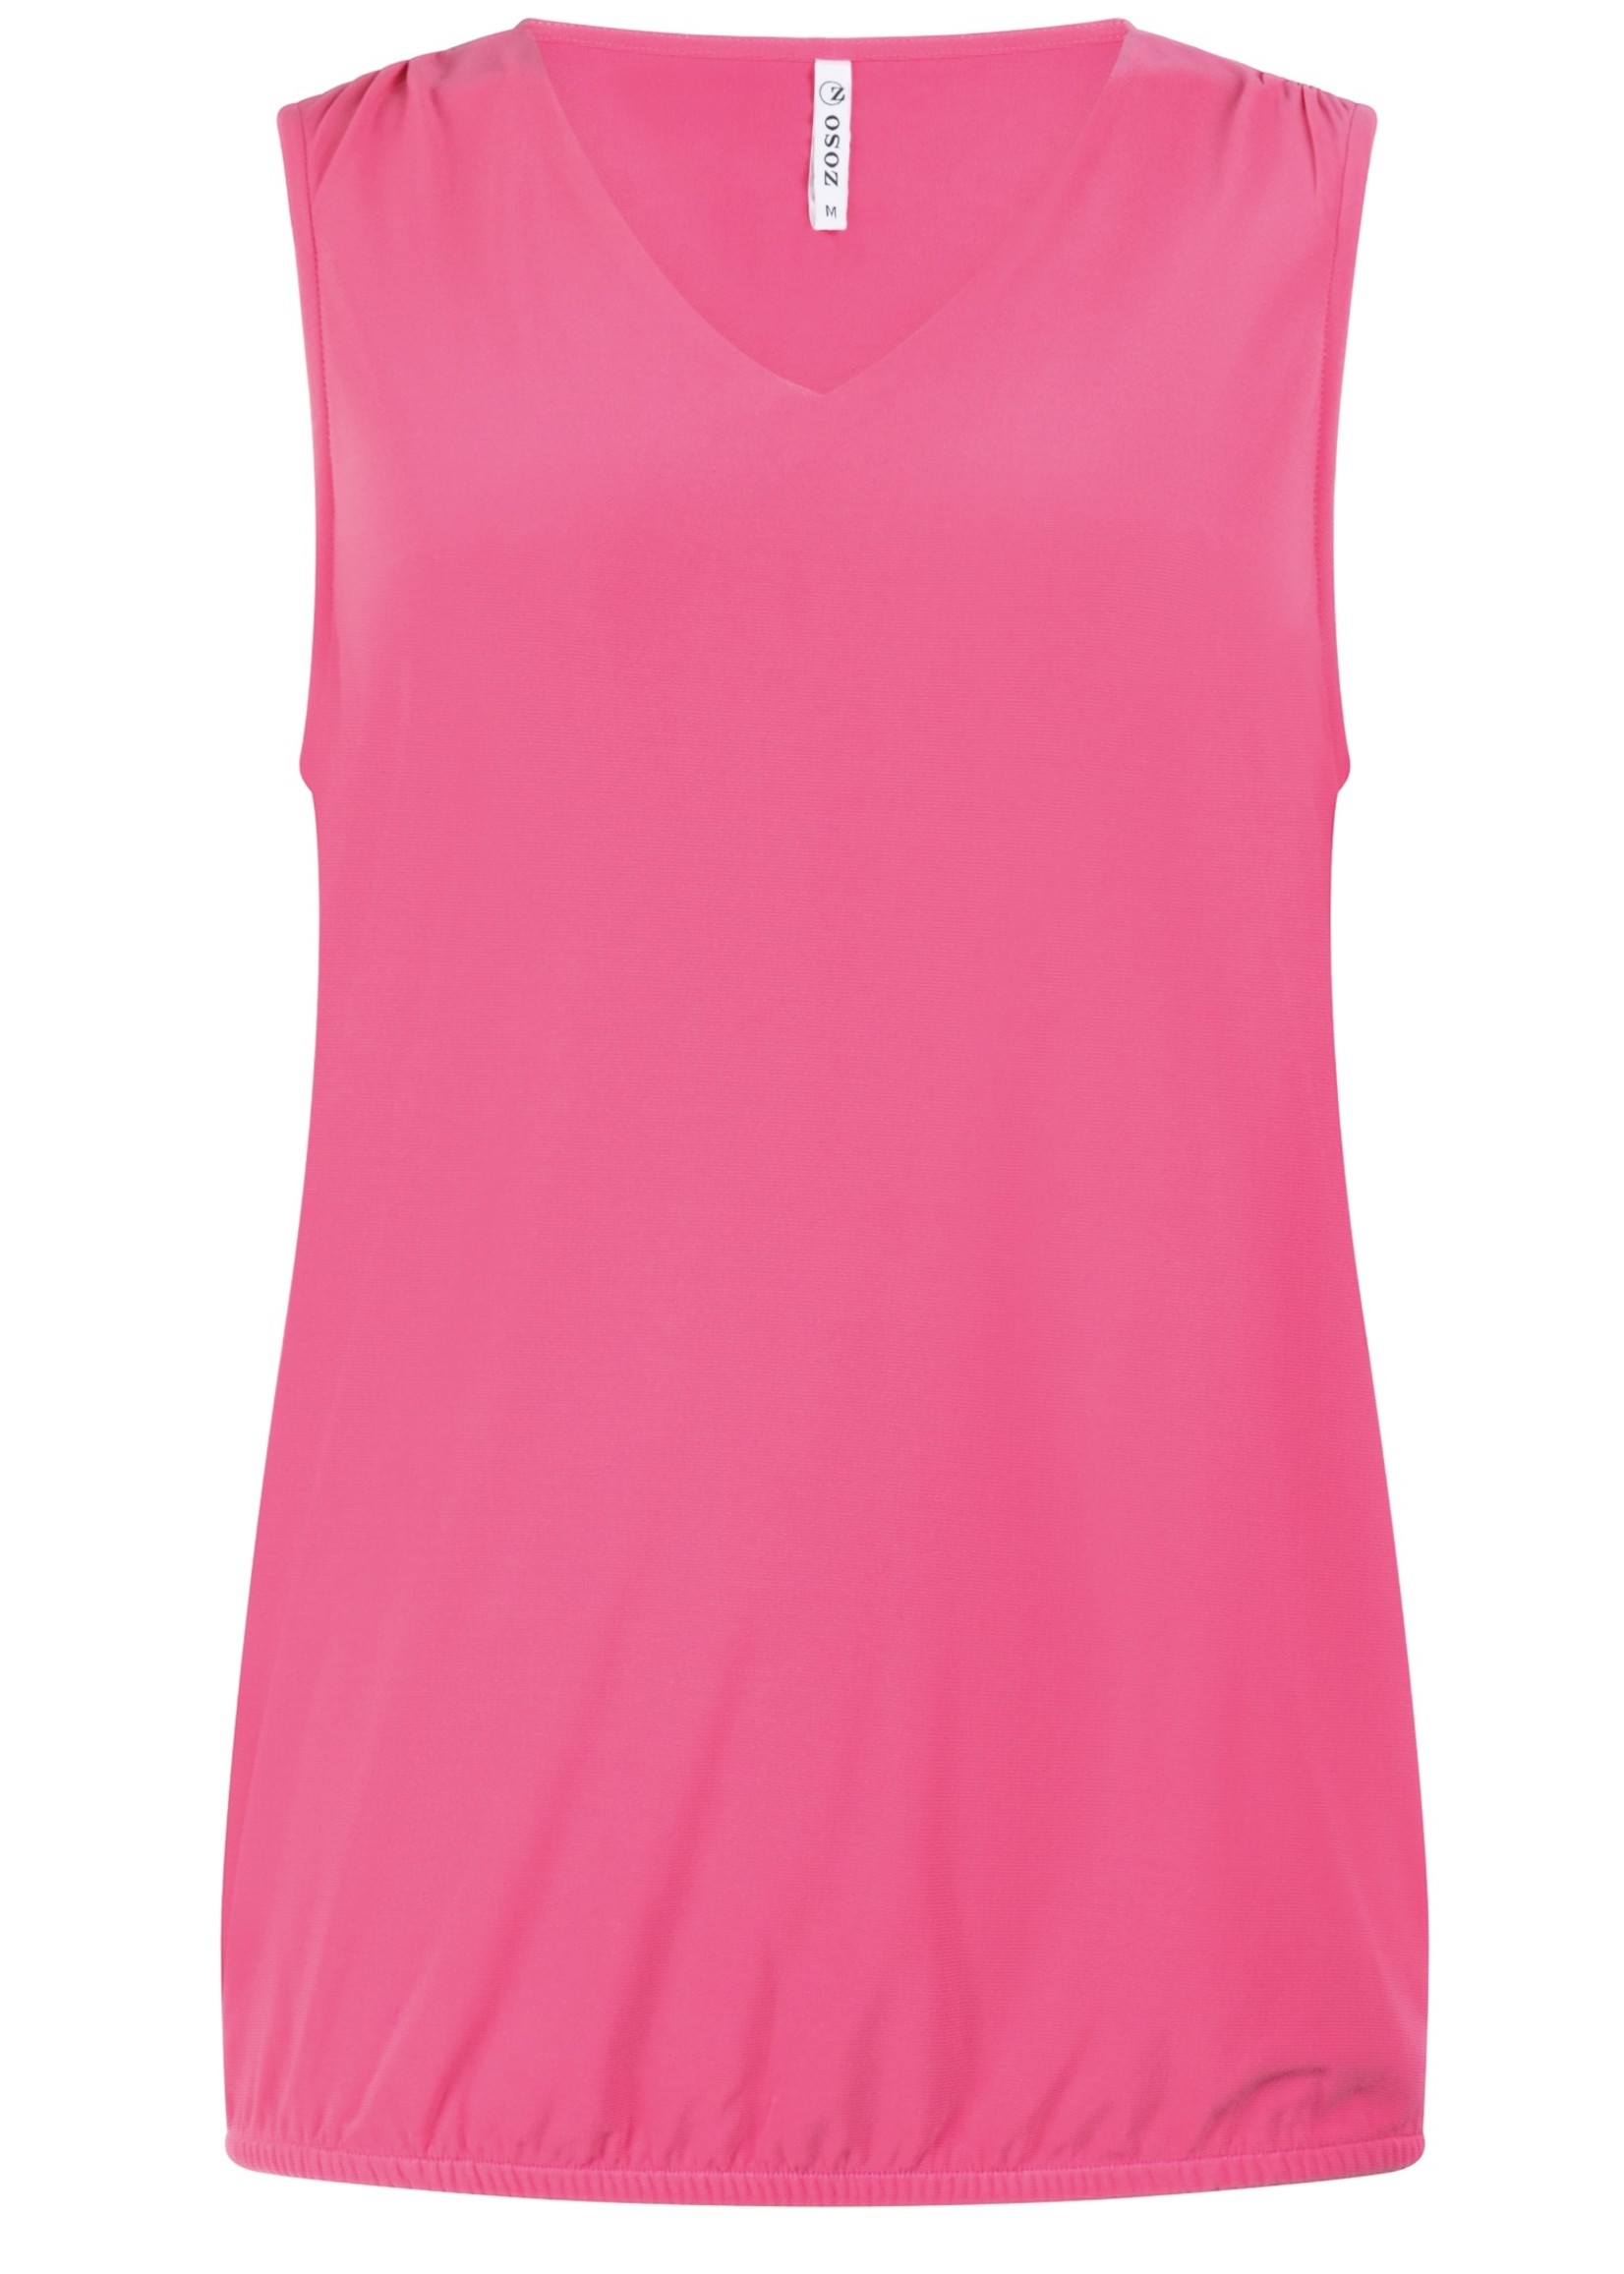 Zoso Zoso - Denise - splendor sleeveless top - Bright pink, Green